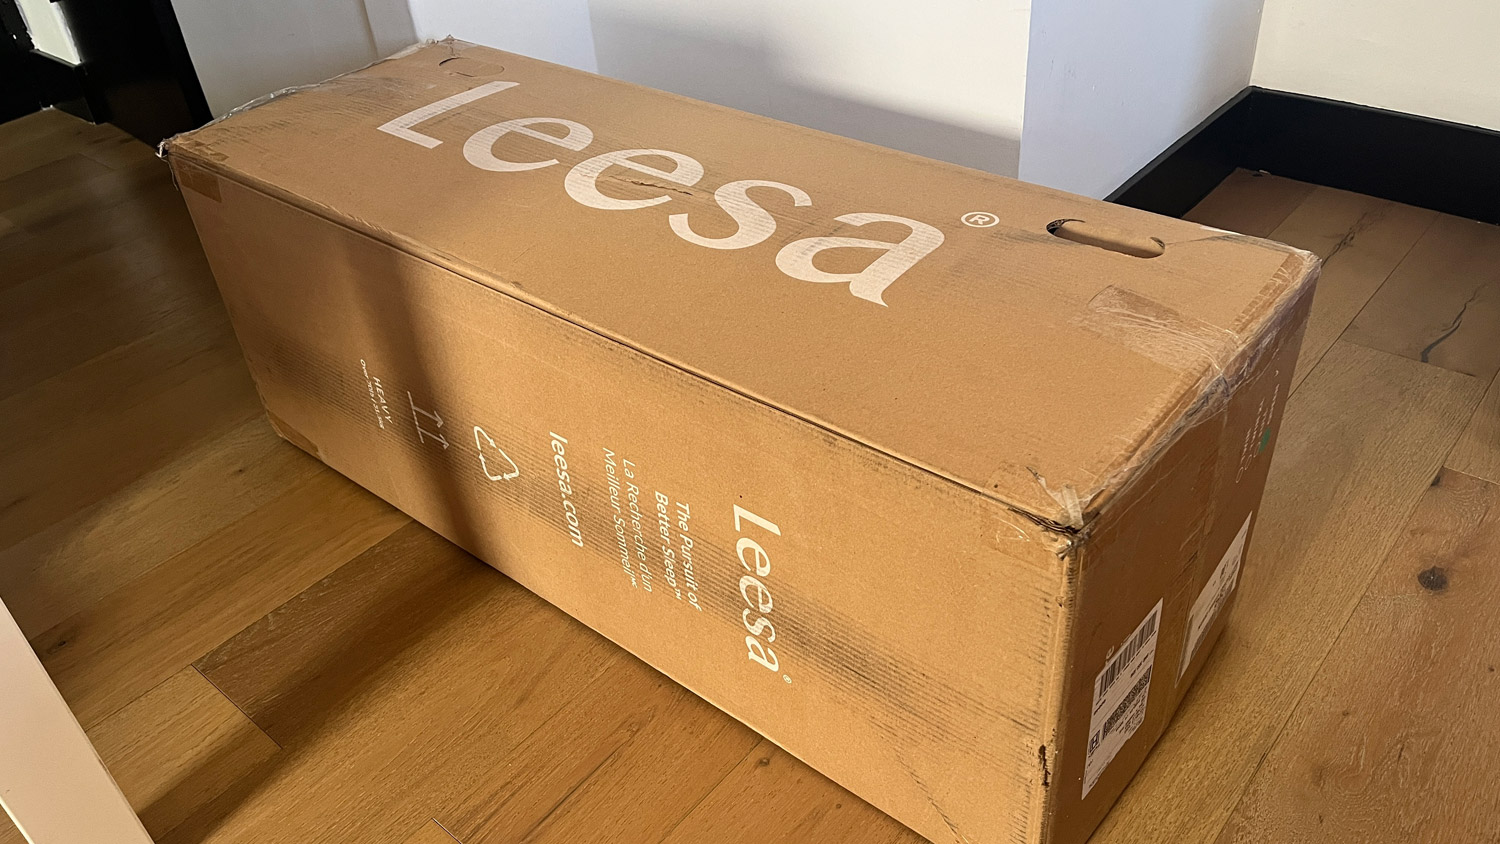 The Leesa Sapira Hybrid Mattress in its delivery box